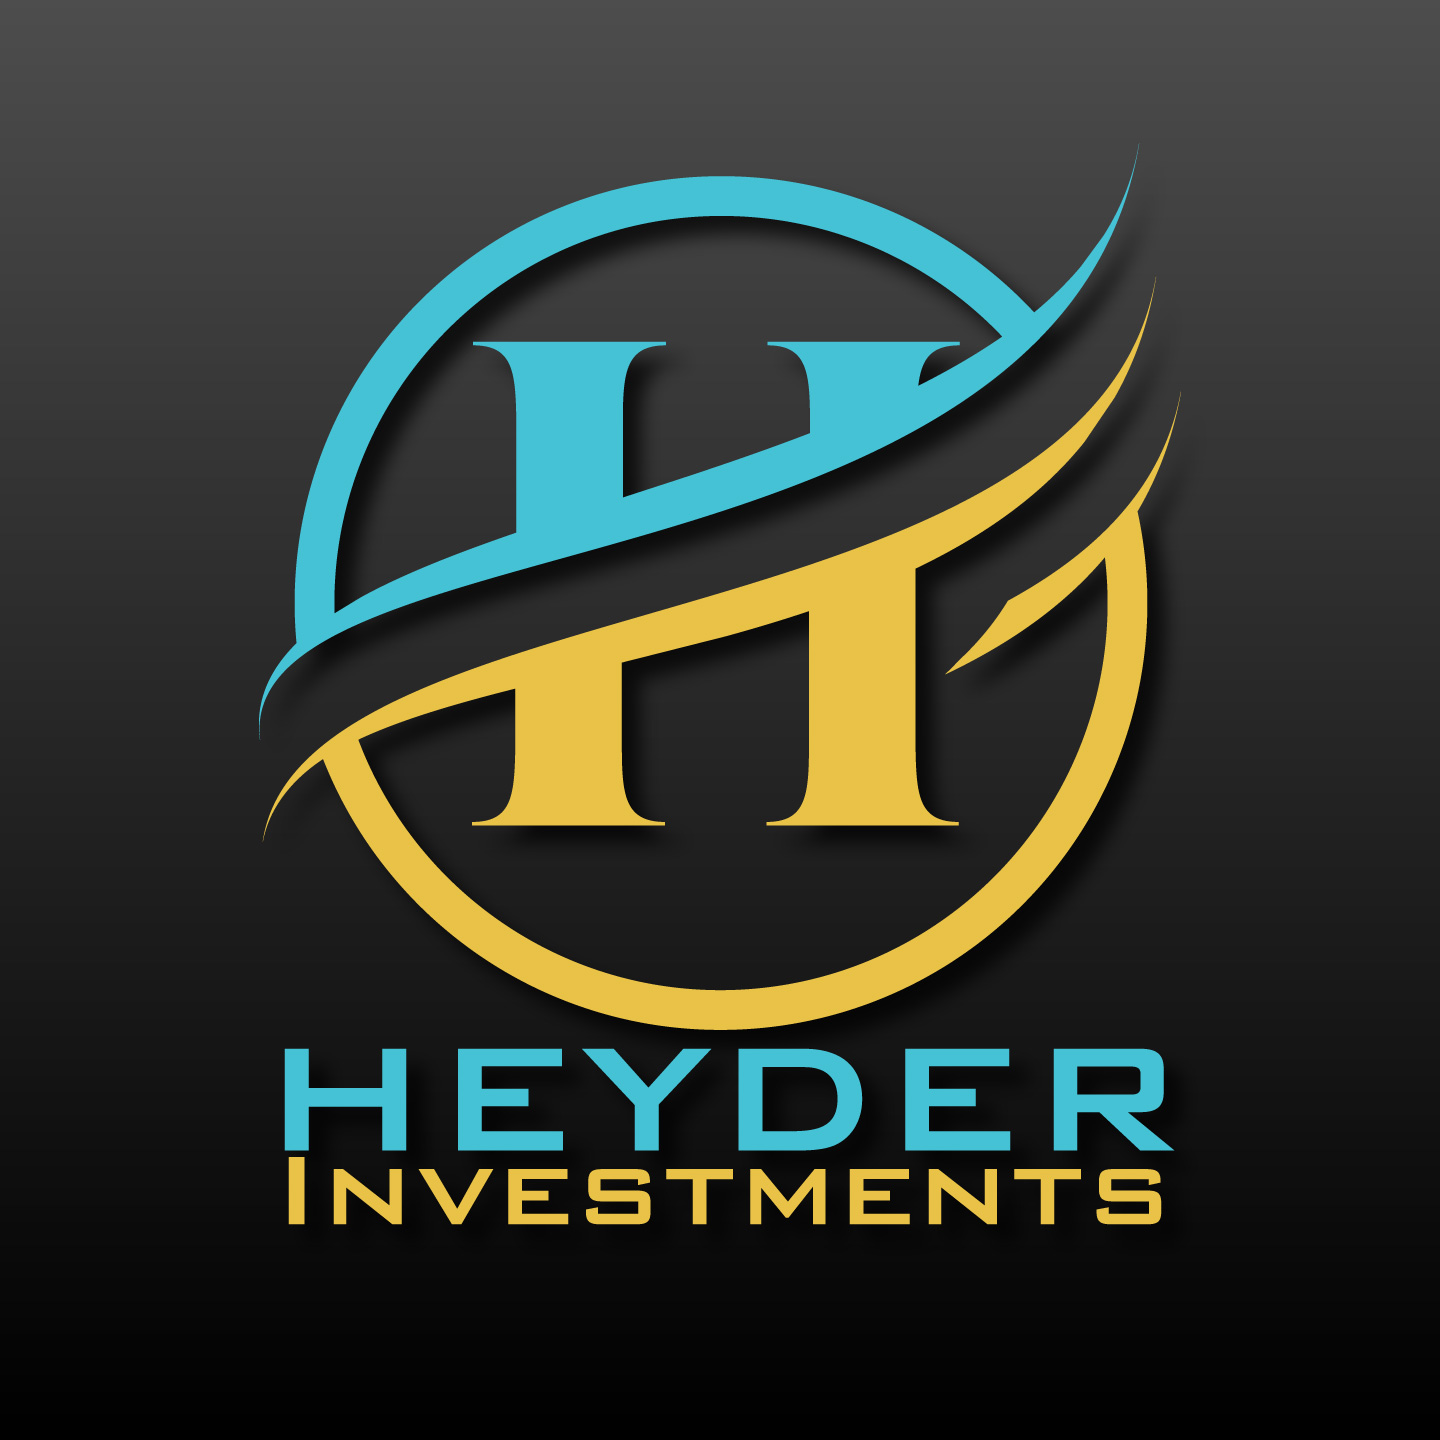 HEYDER INVESTMENTS